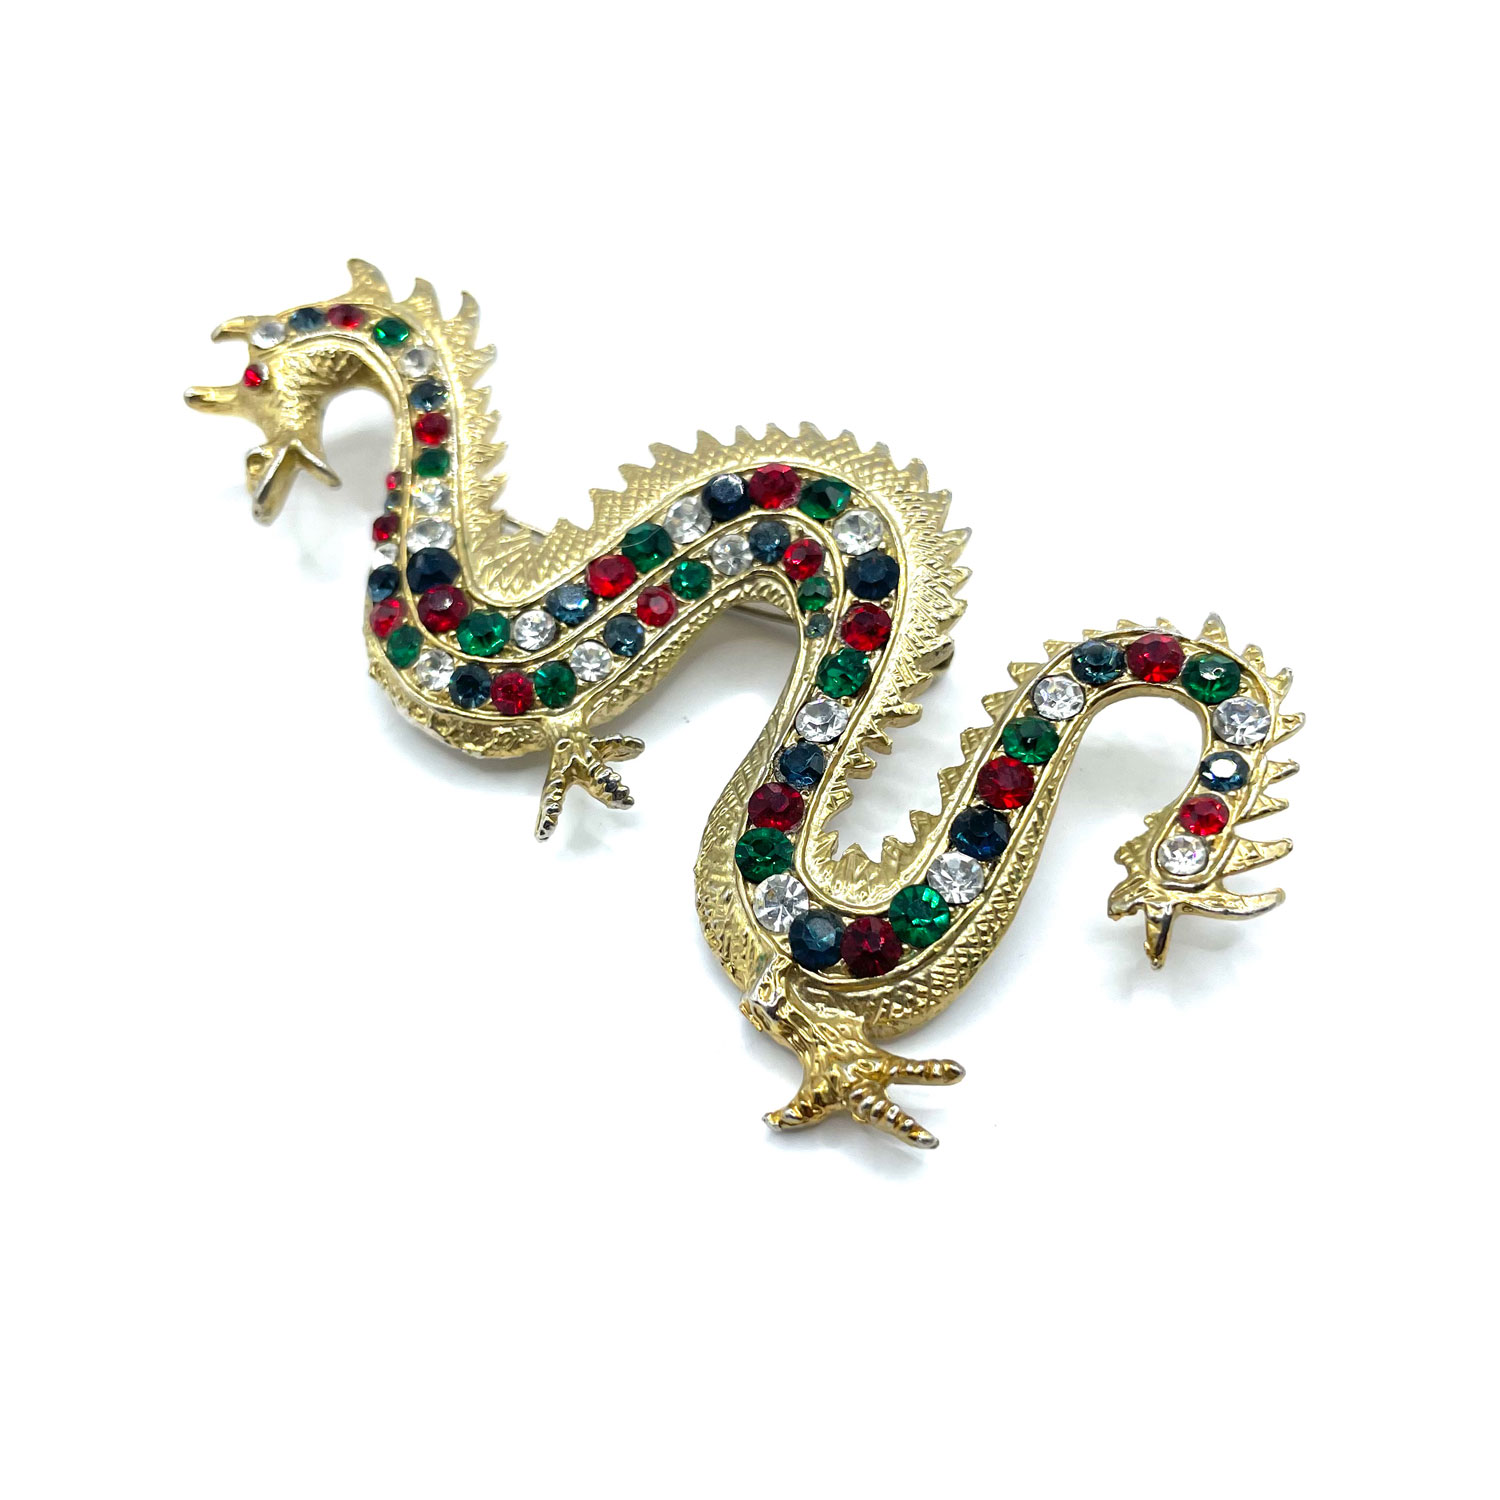 Rhinestone Chinese dragon brooch